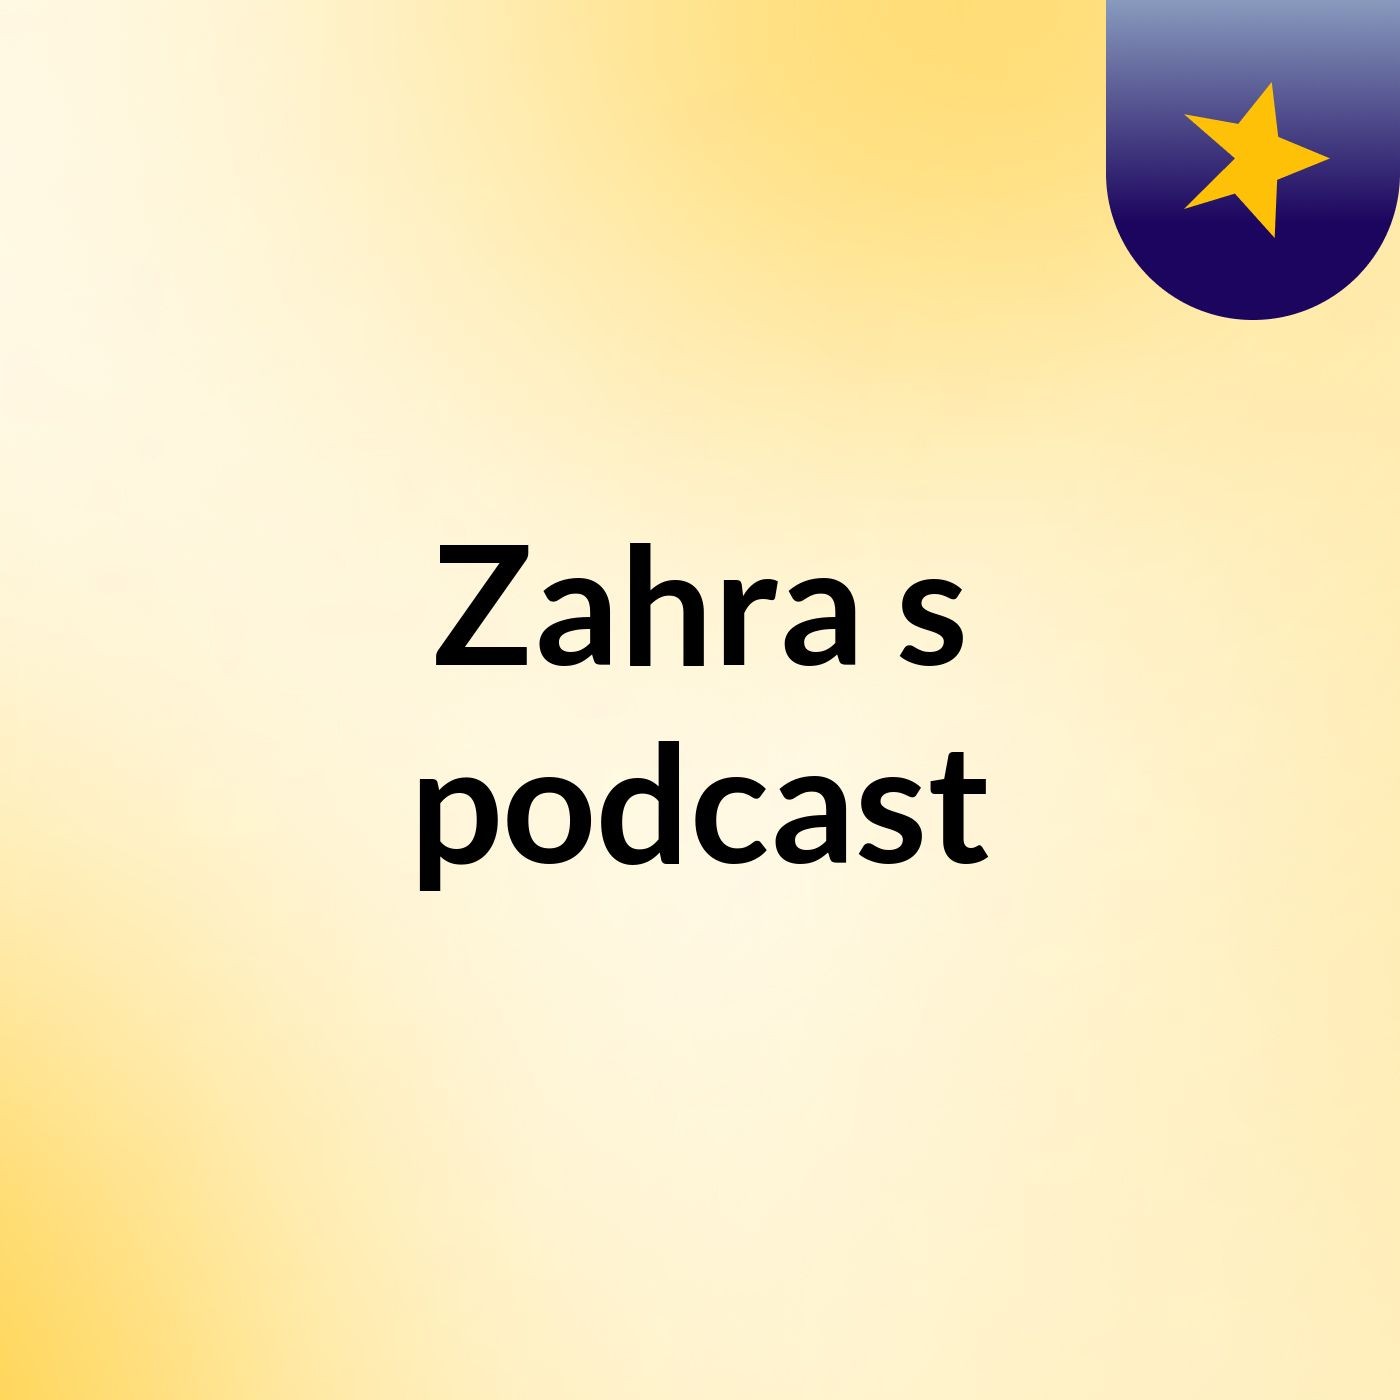 Episode 3 - Zahra's podcast